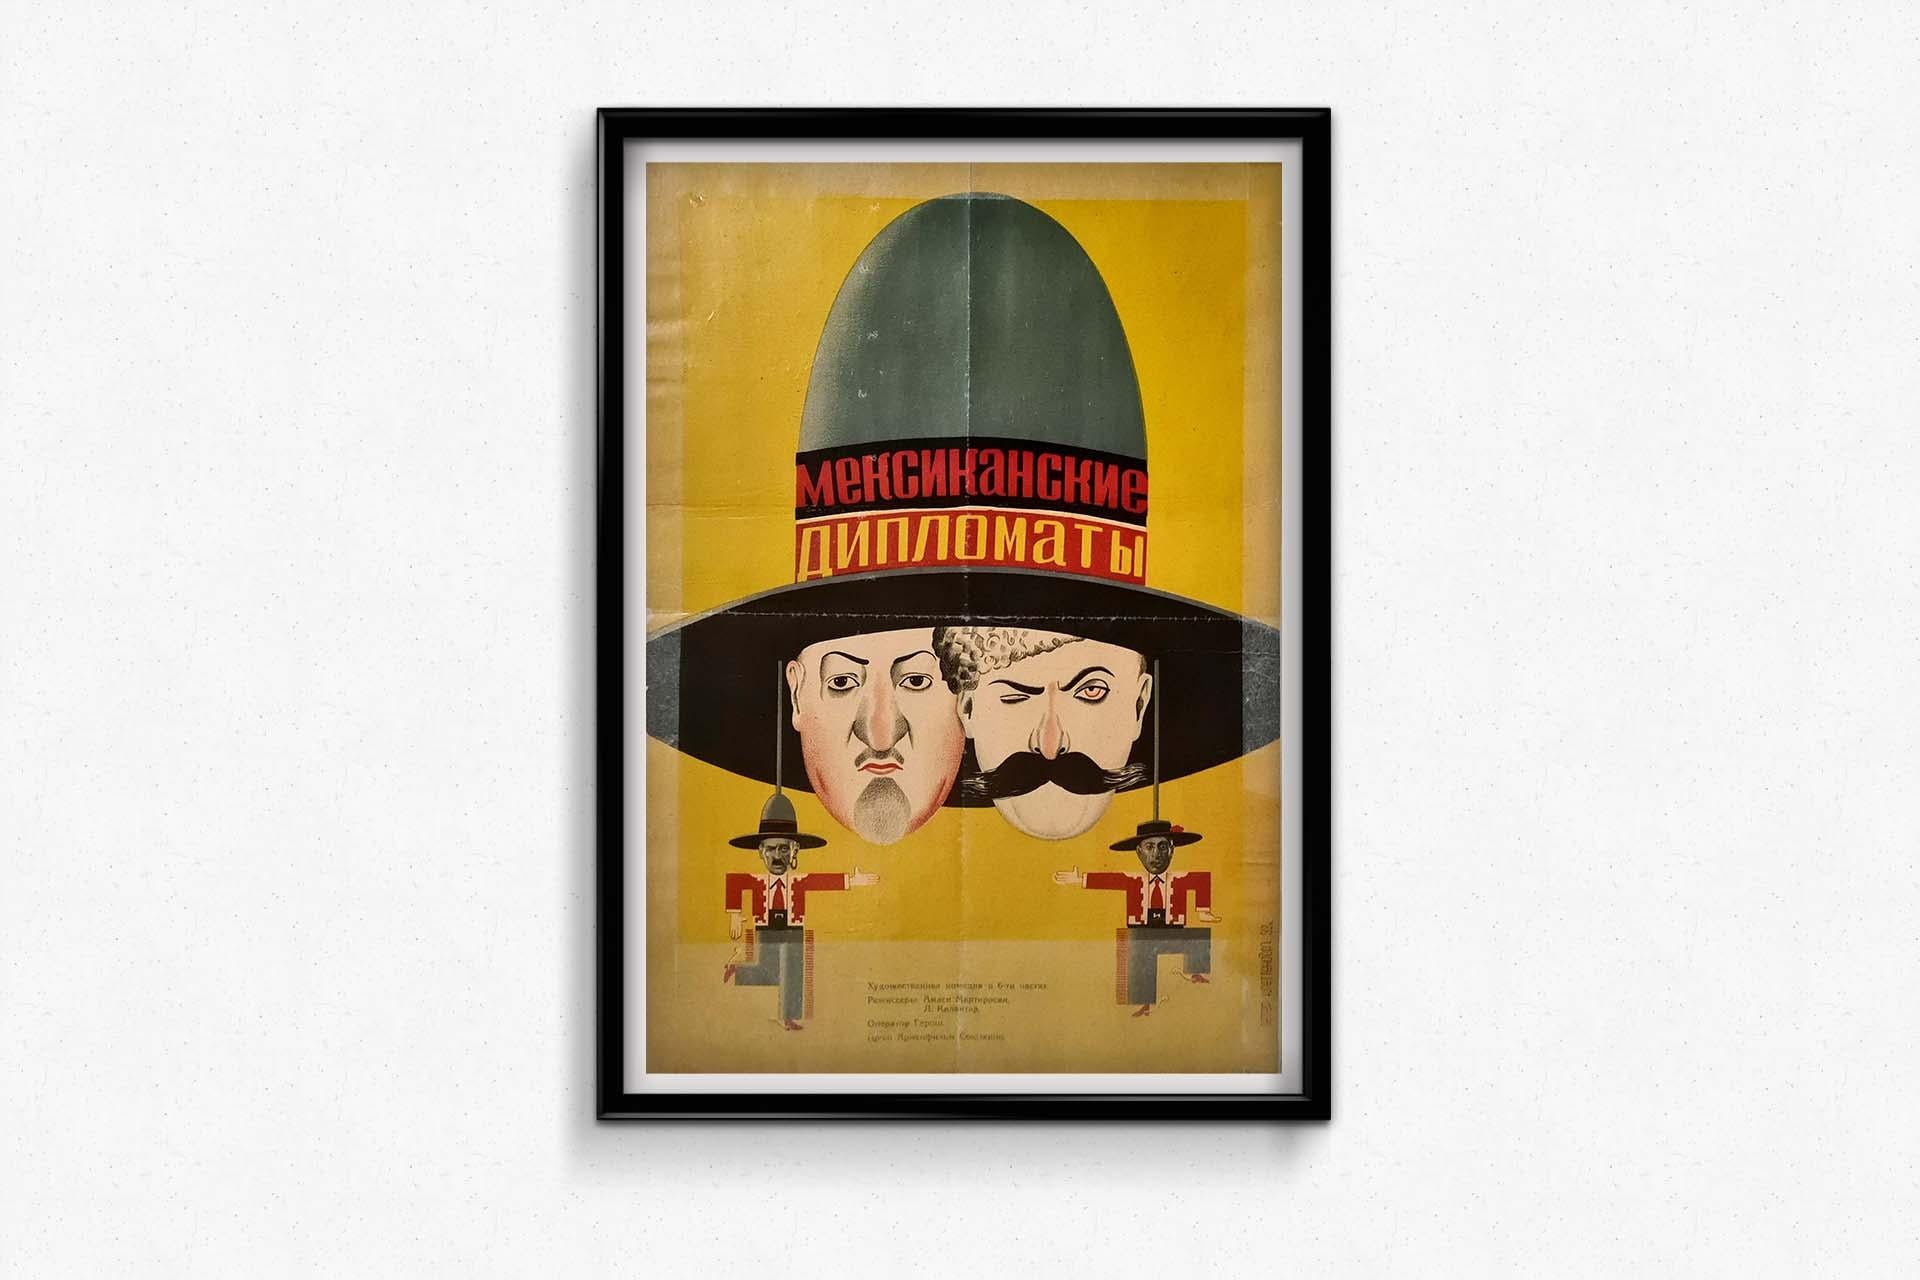  1932 original soviet movie poster for 